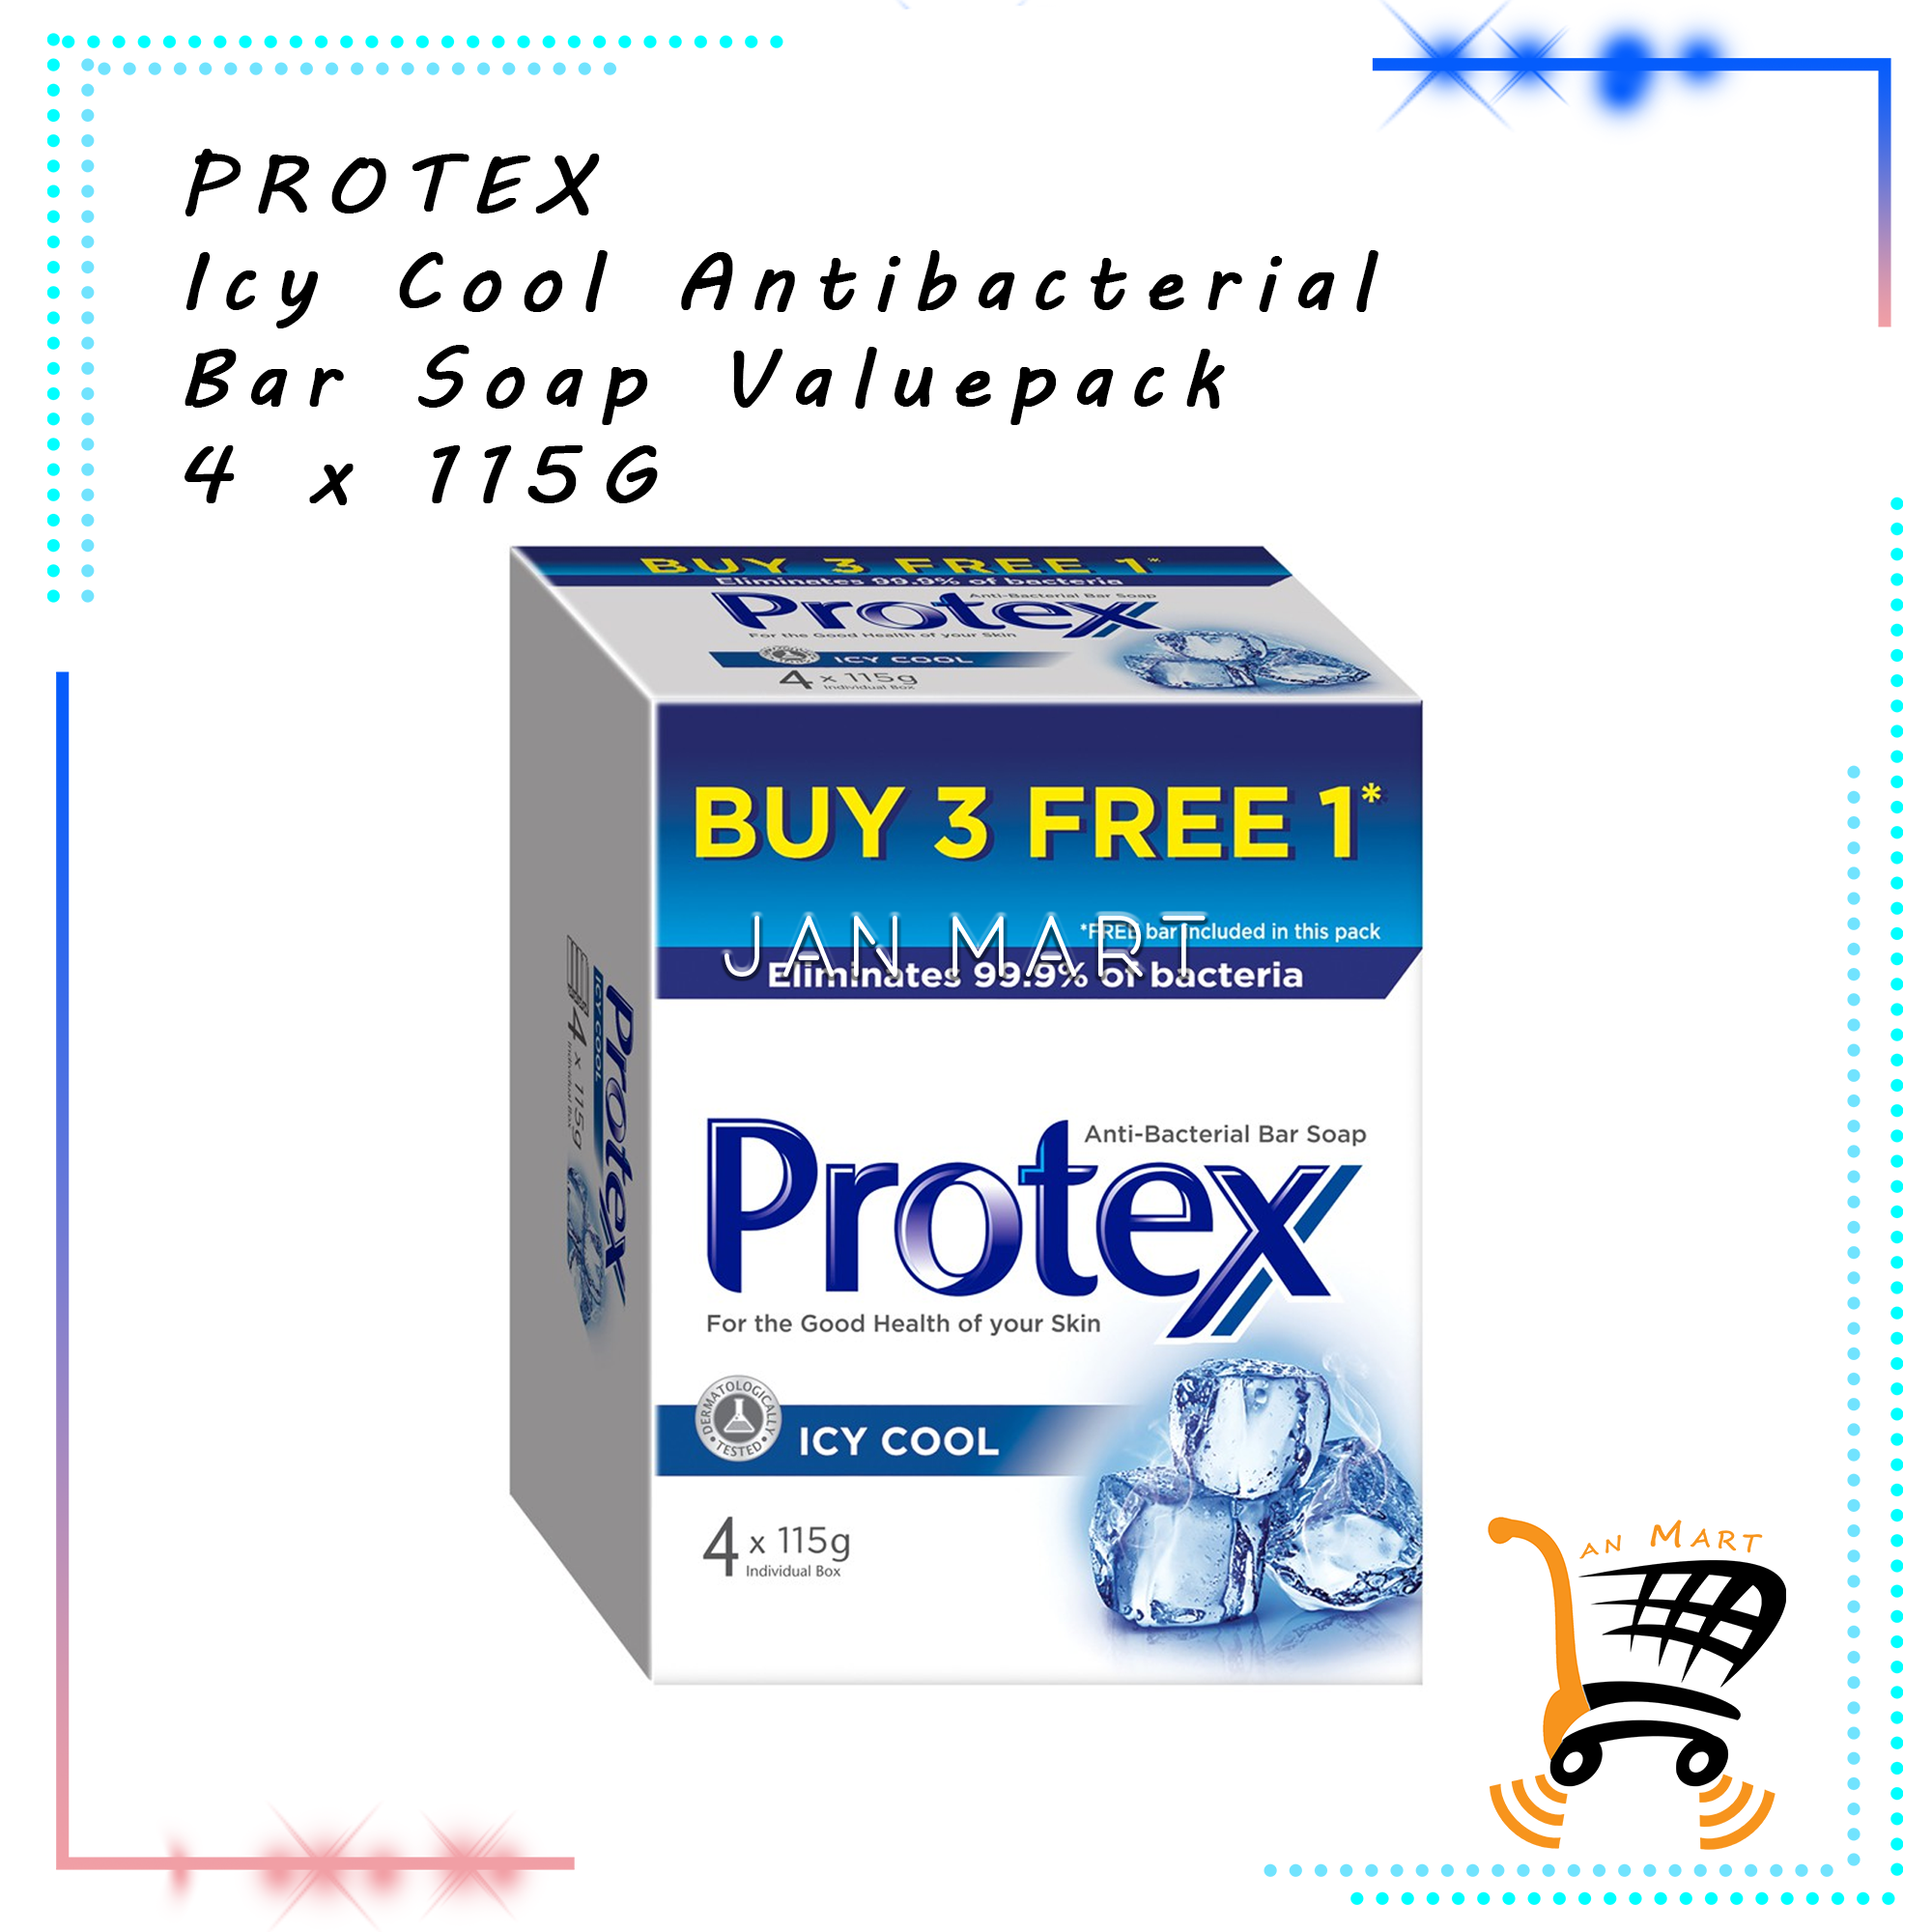 PROTEX Icy Cool Antibacterial Bar Soap Valuepack 4 x 115G